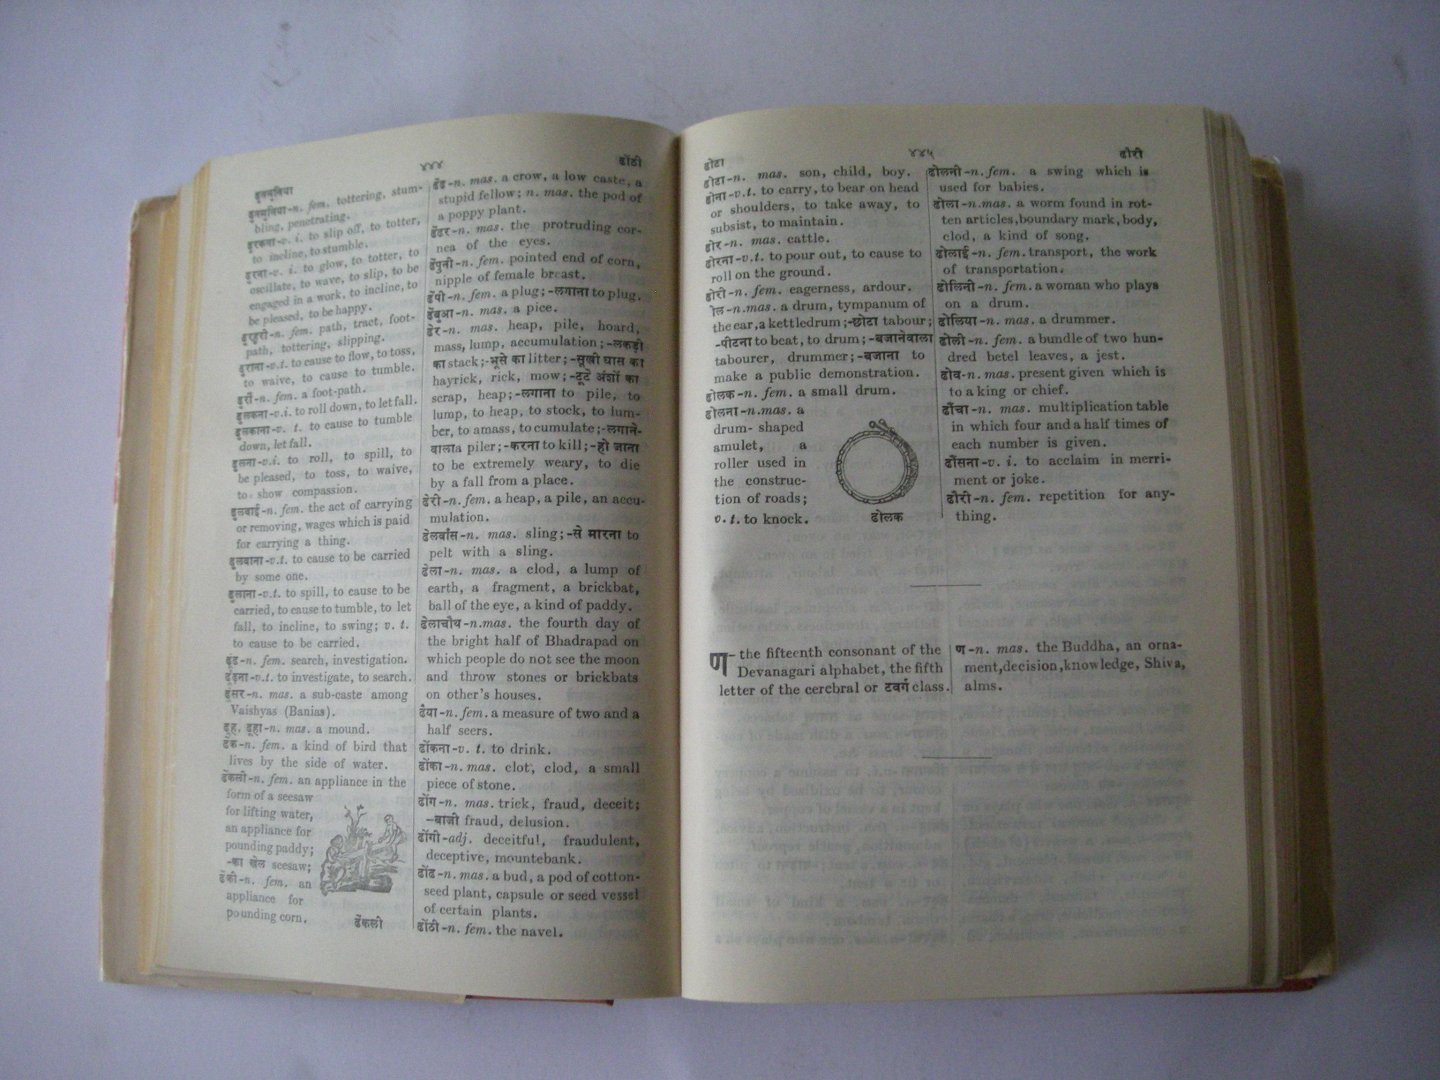 Pathak, Prof. R.C., compiled and edited - Standard Illustrated Dictionary of the Hindi Language (Hindi-English Edition)